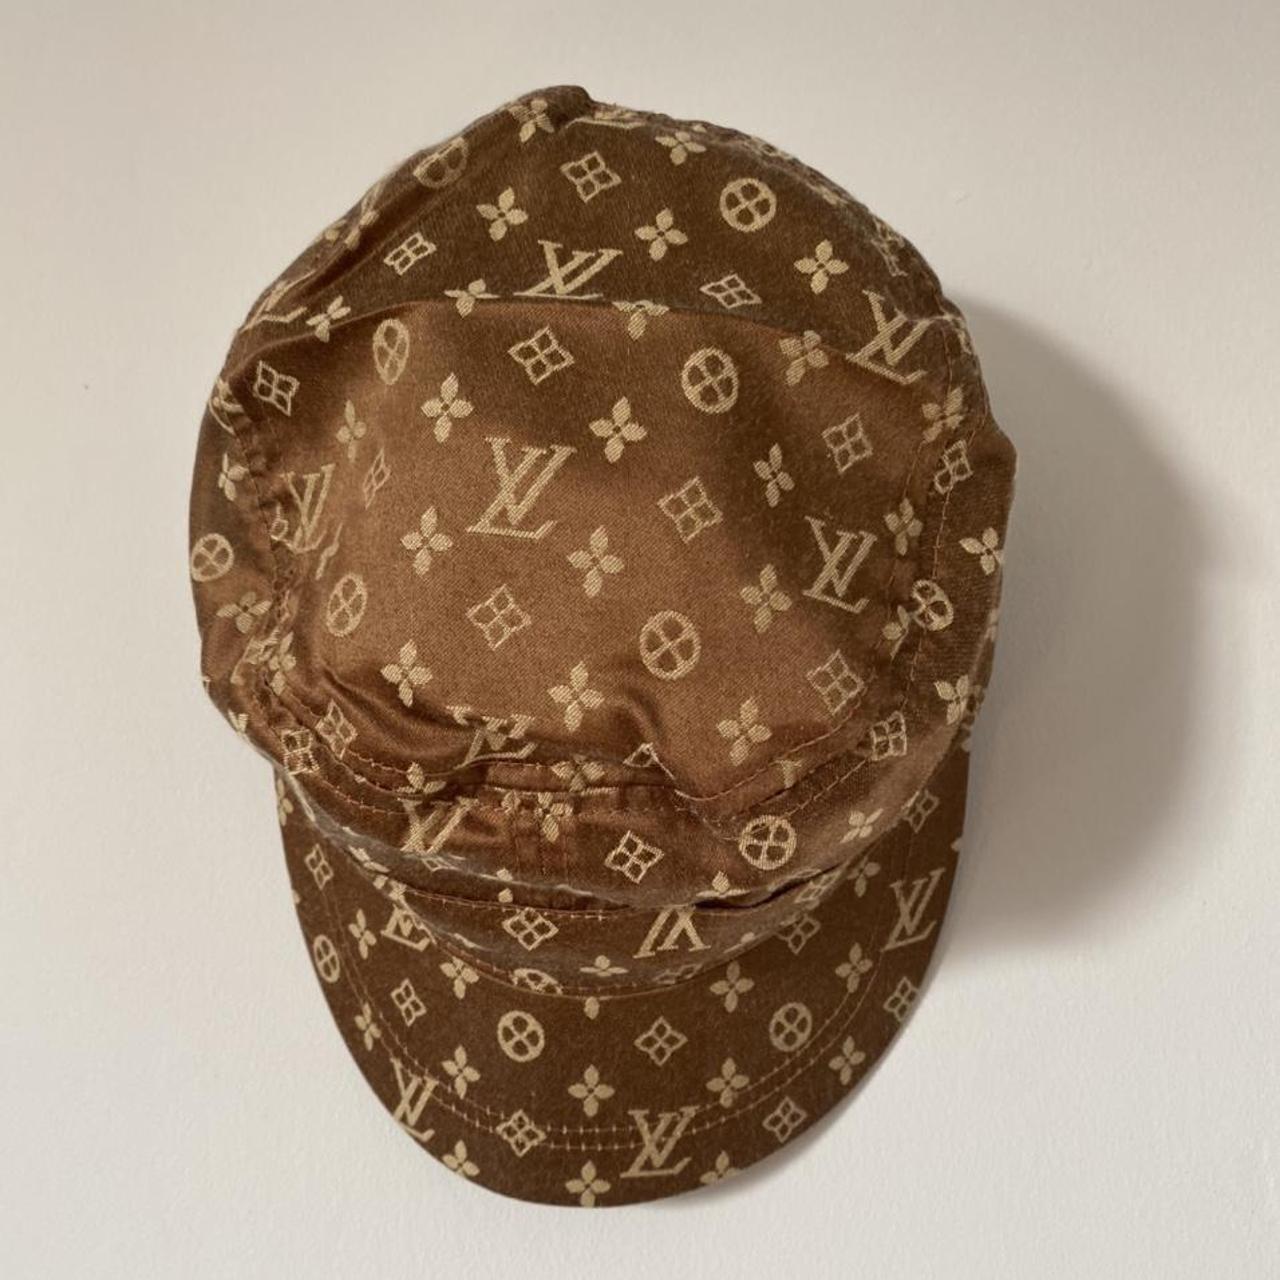 Louis Vuitton cap #lv #louisvuitton #hat #designer - Depop